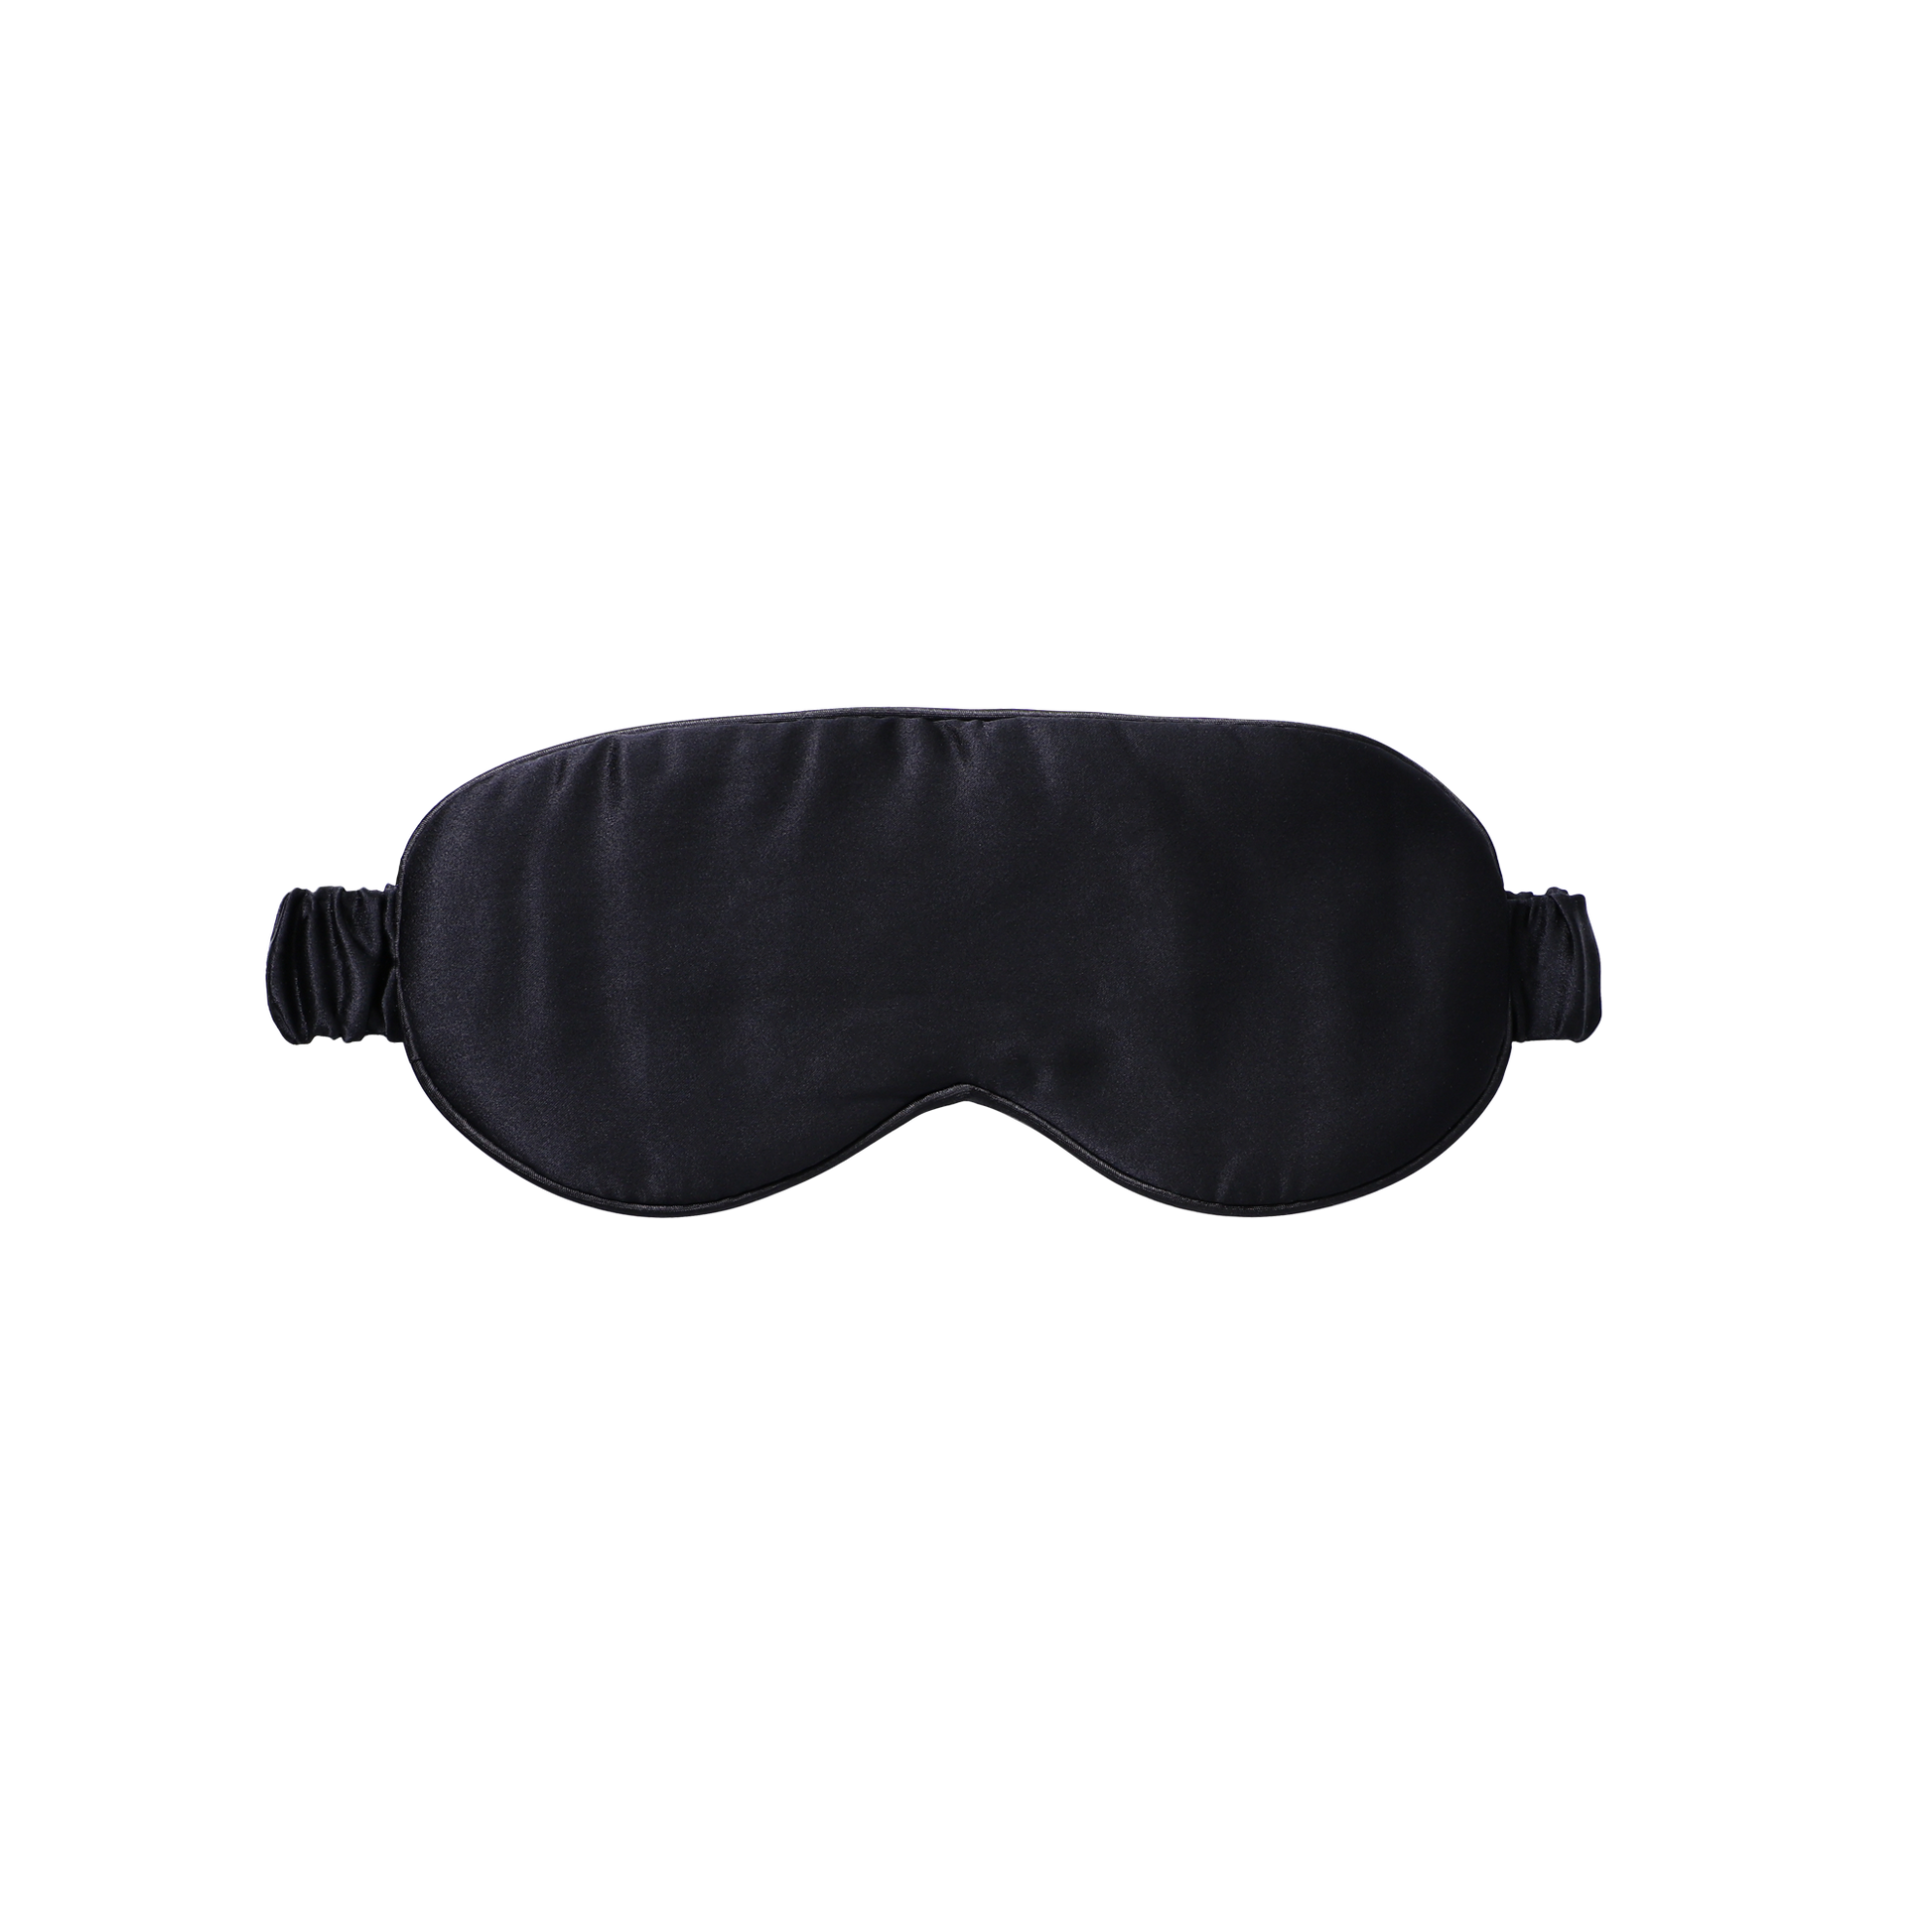 5008-SMBLACK?Silversilk sleep mask in black